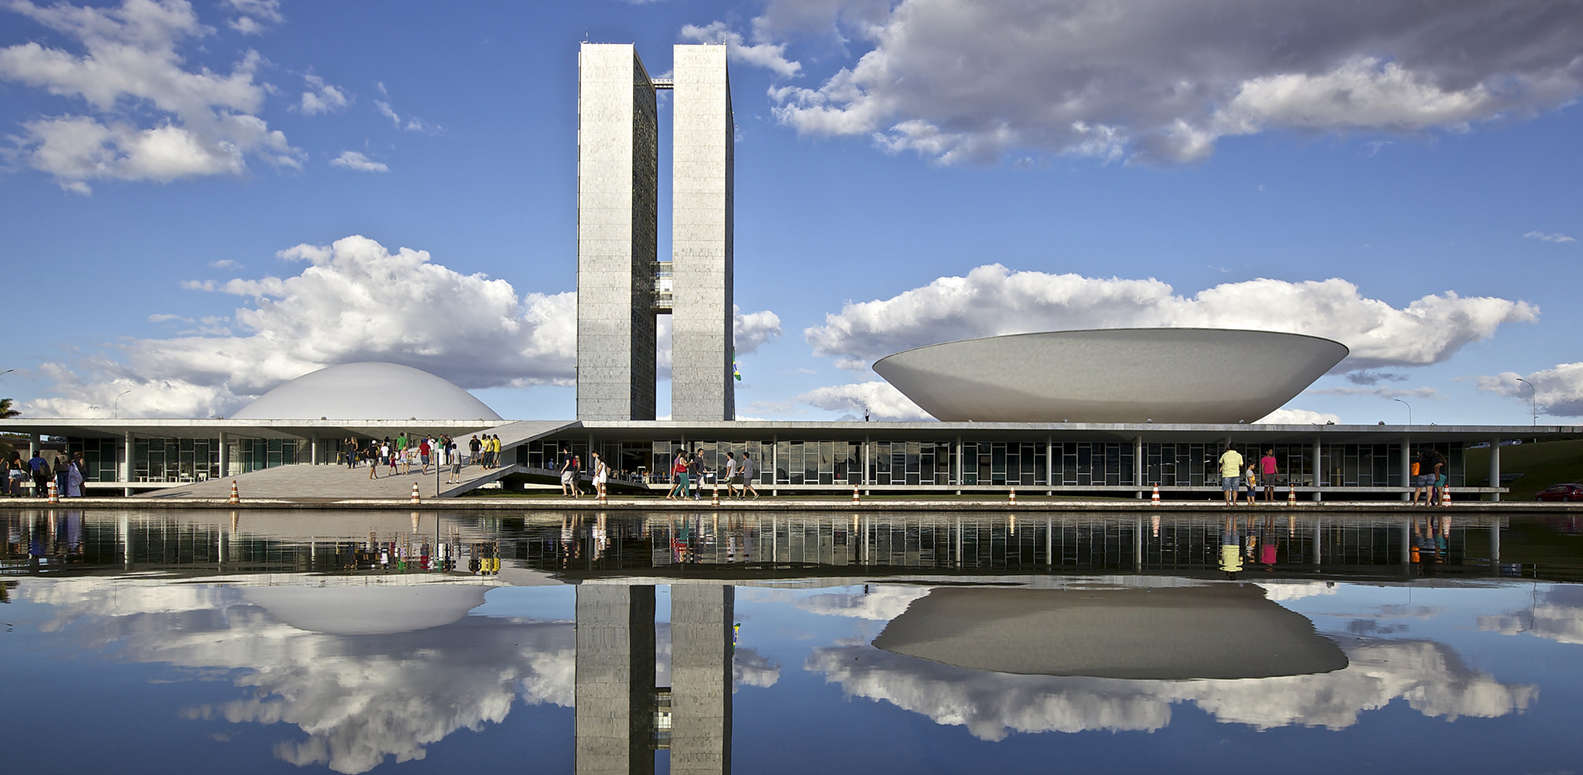 http://julidays.com/images/main/brasil/julidays-destinos-brasil-parlamentobrasilia-04.jpg